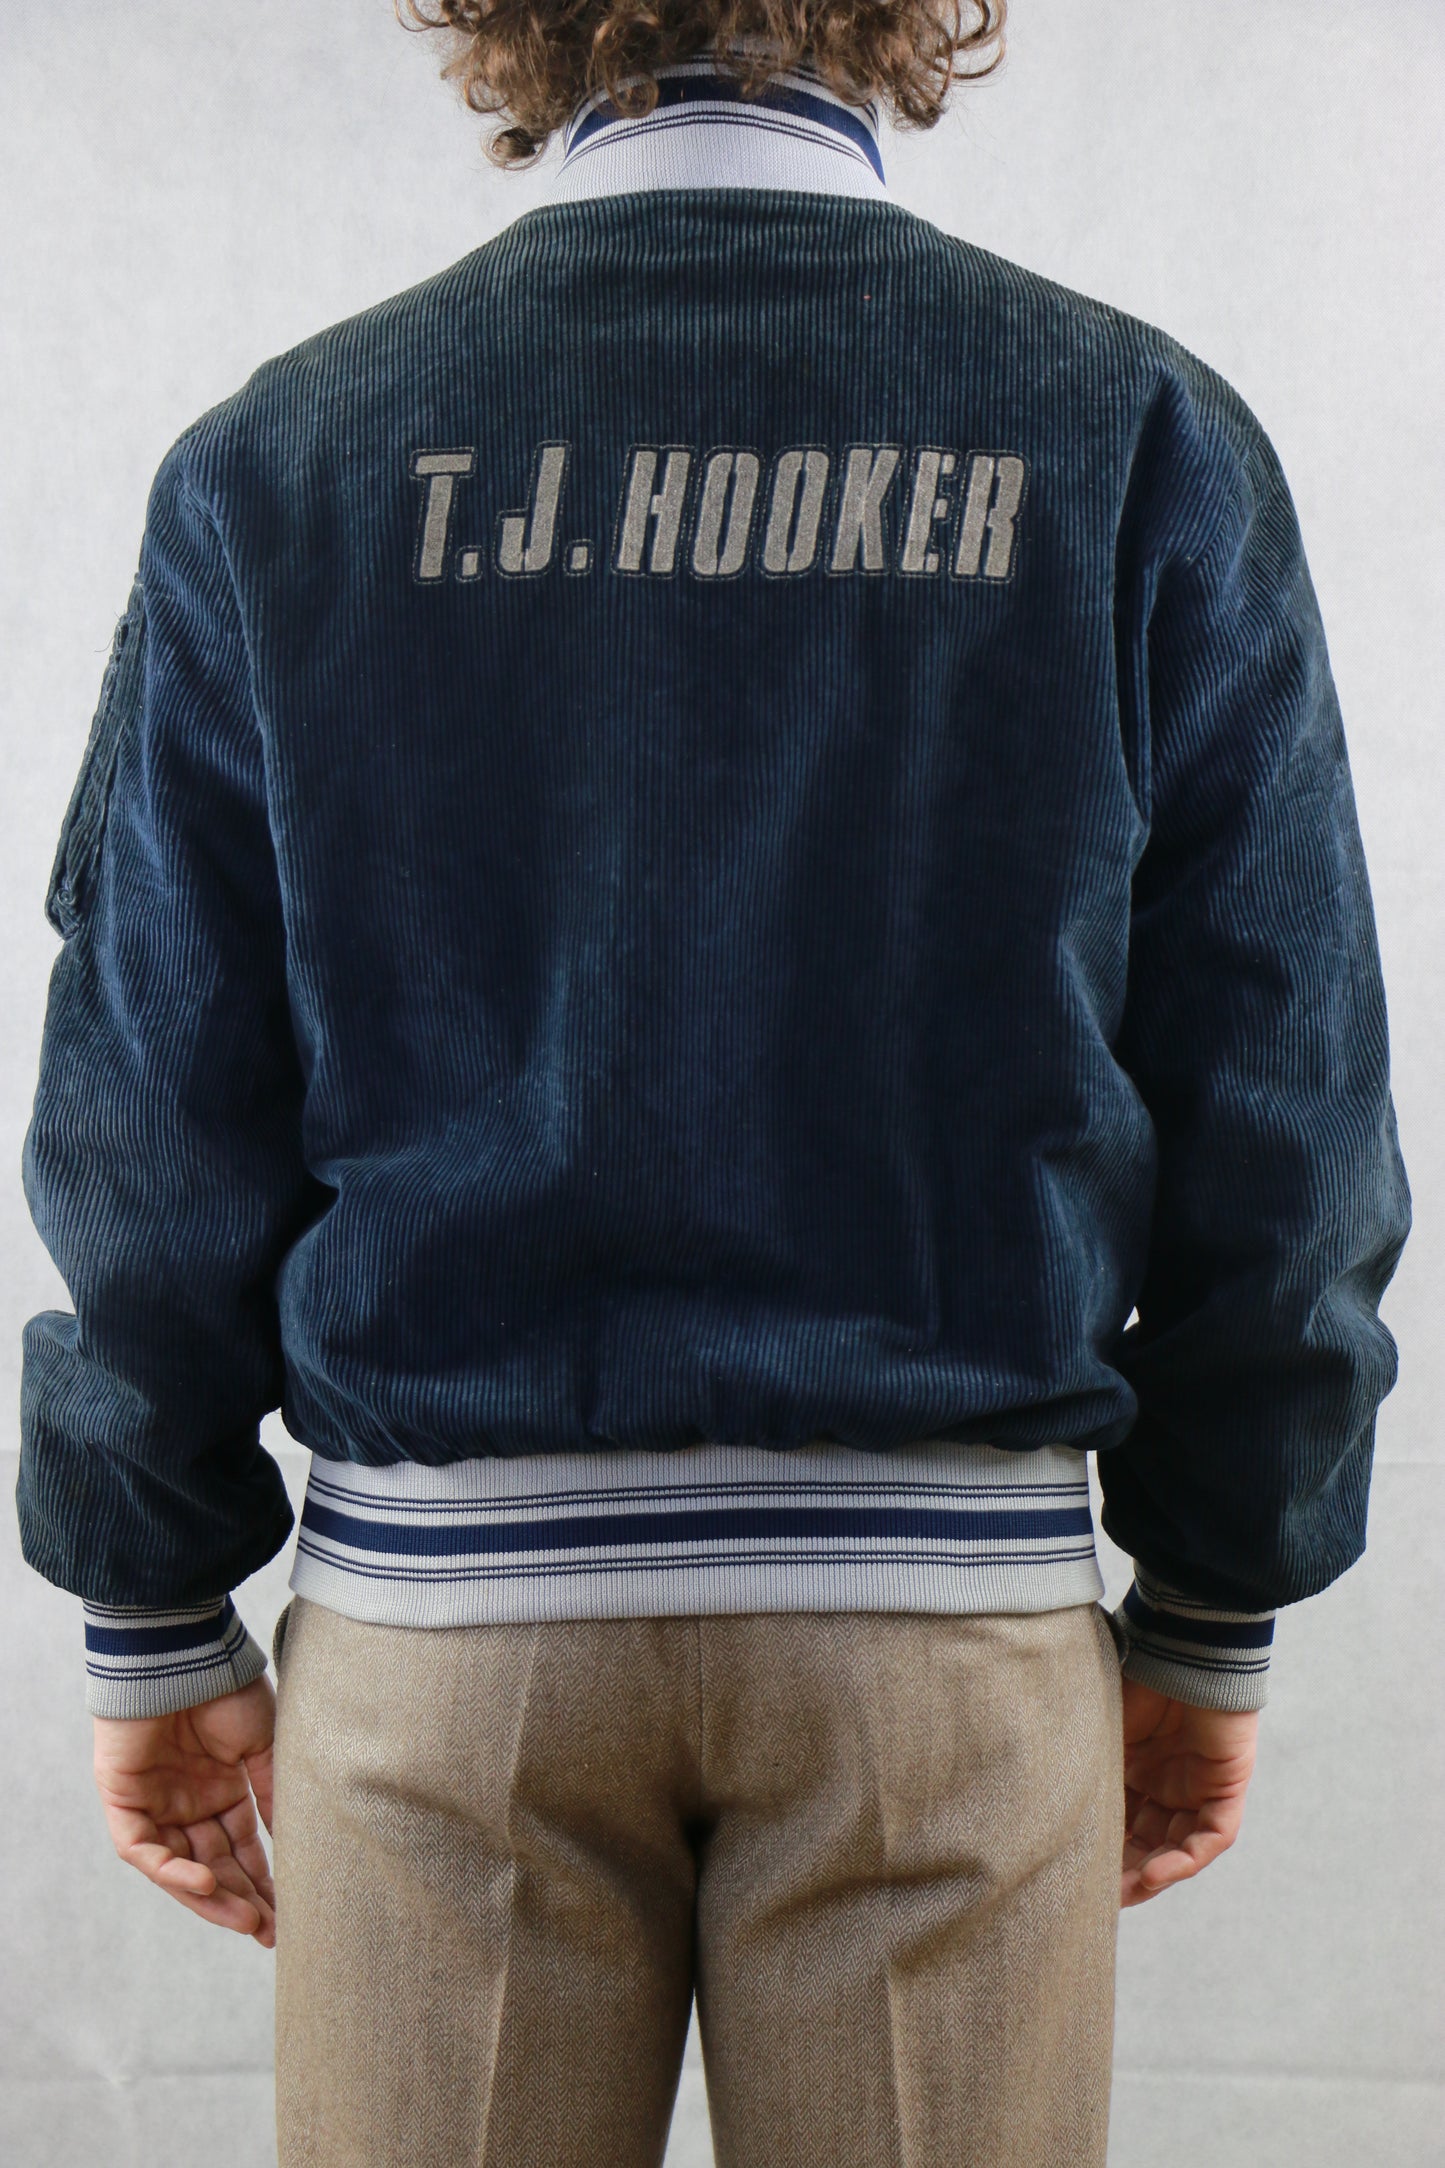 T.J. Hooker Corduroy Jacket, clochard92.com